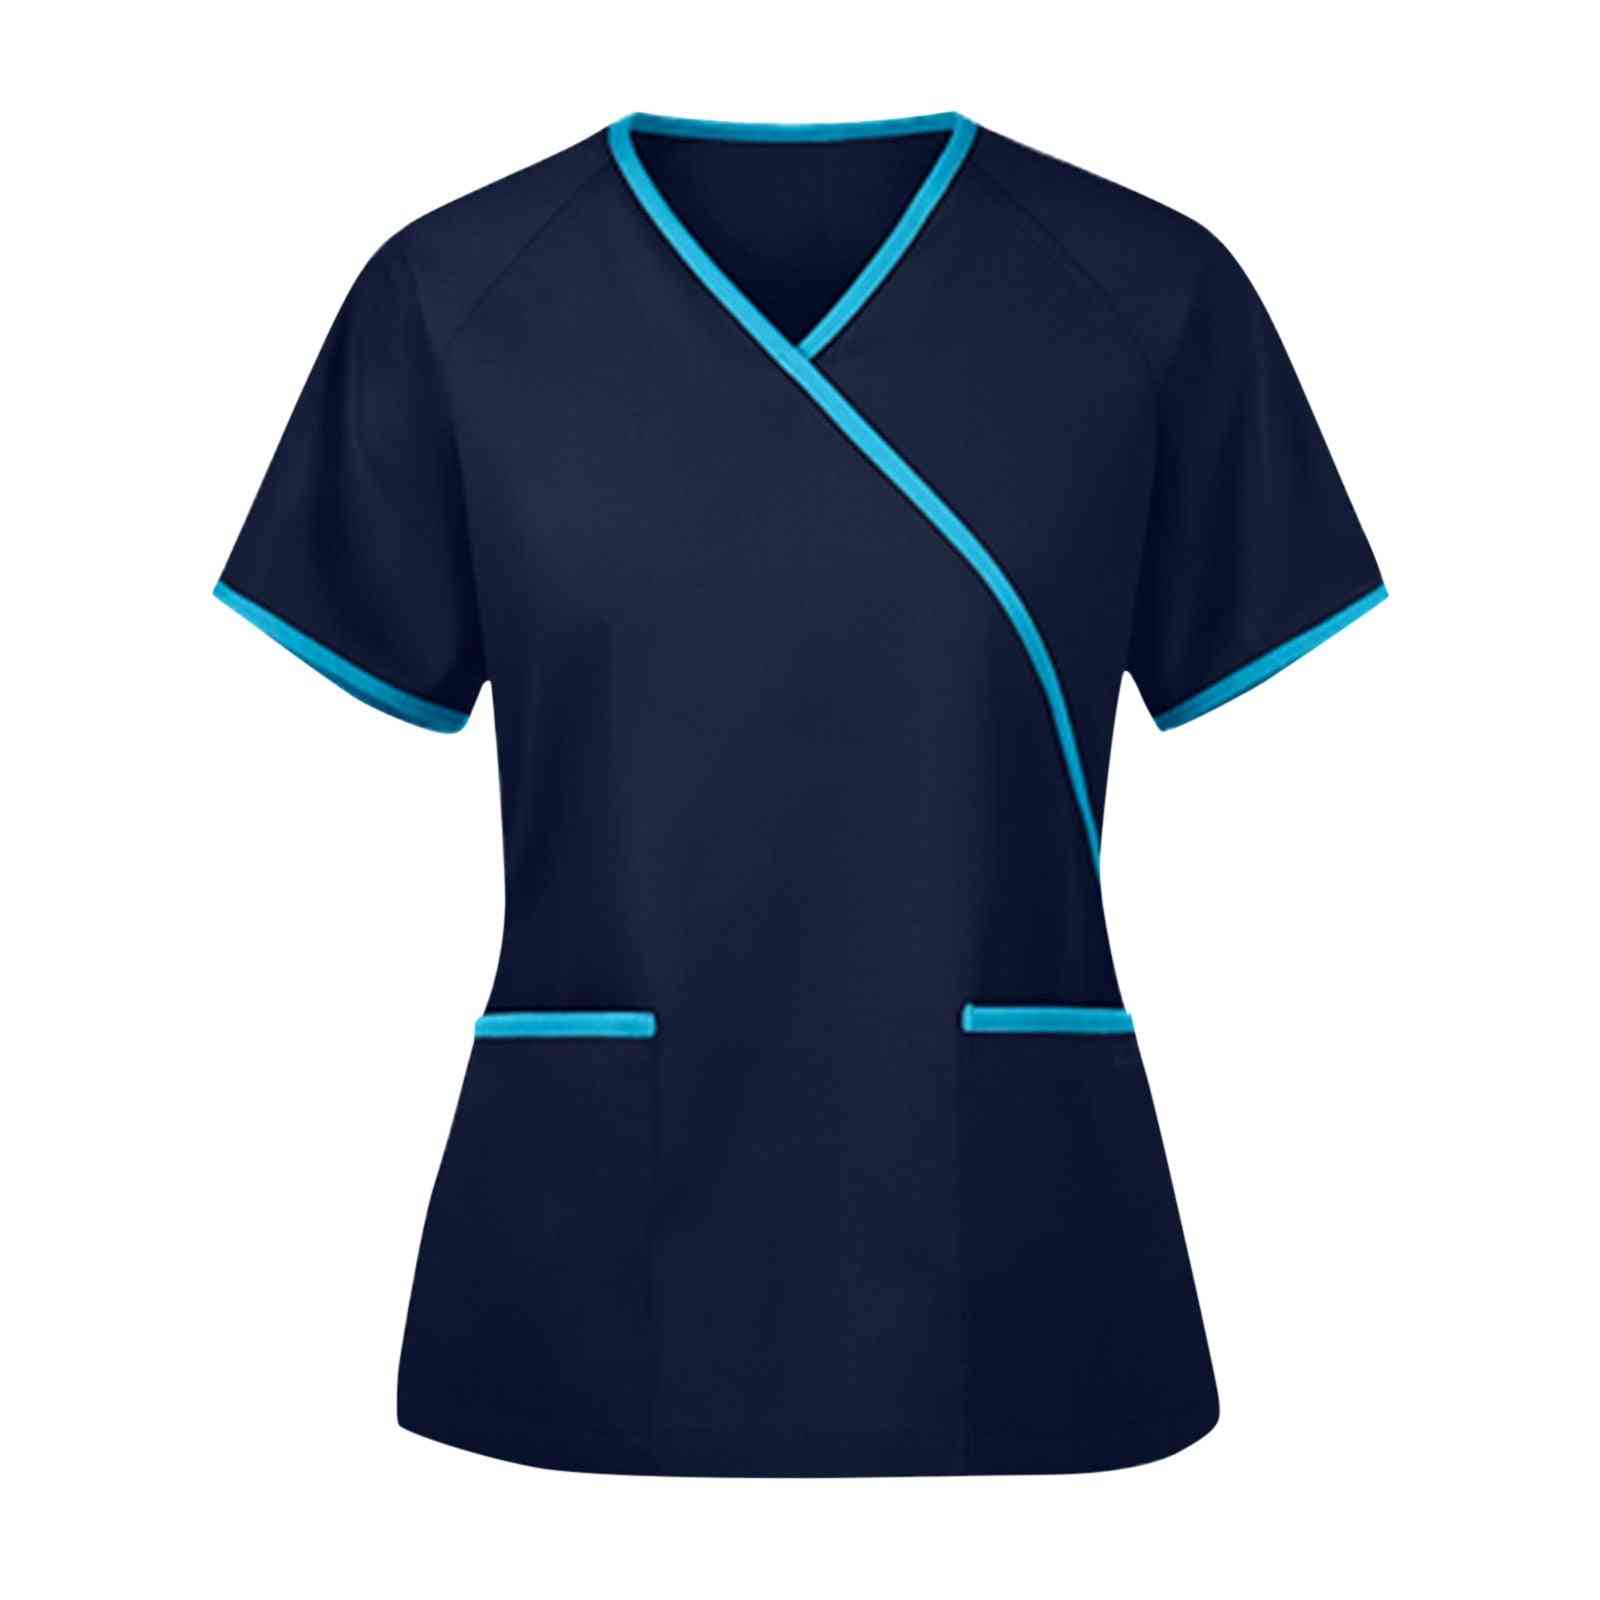 Nurse Uniform Scrubs Tops Short Sleeve Pockets Medical Blouse Nursing Clothes Shirts